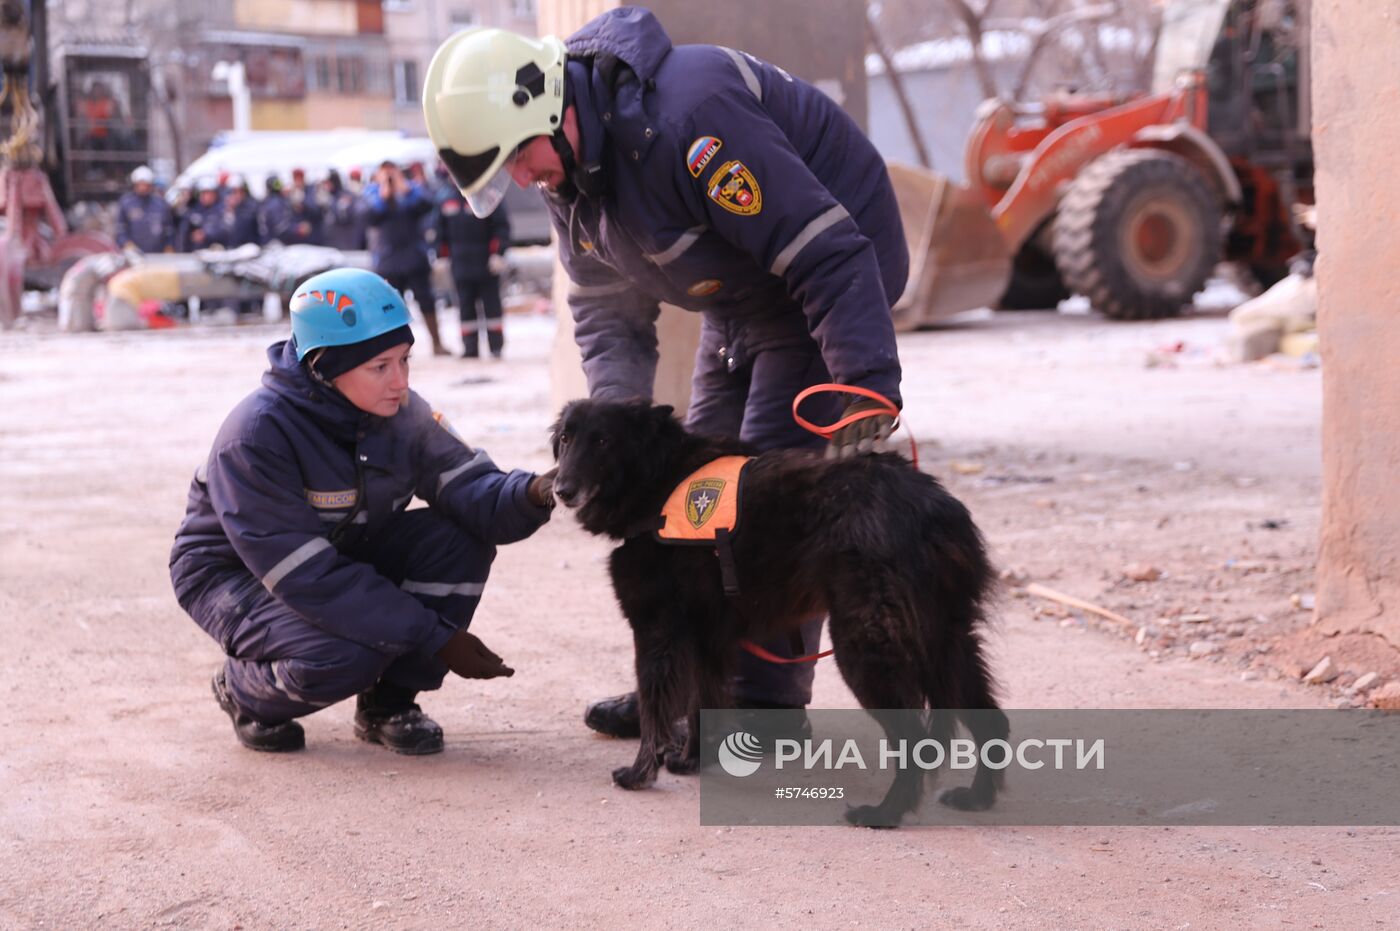 Ситуация в Магнитогорске в связи с обрушением подъезда жилого дома